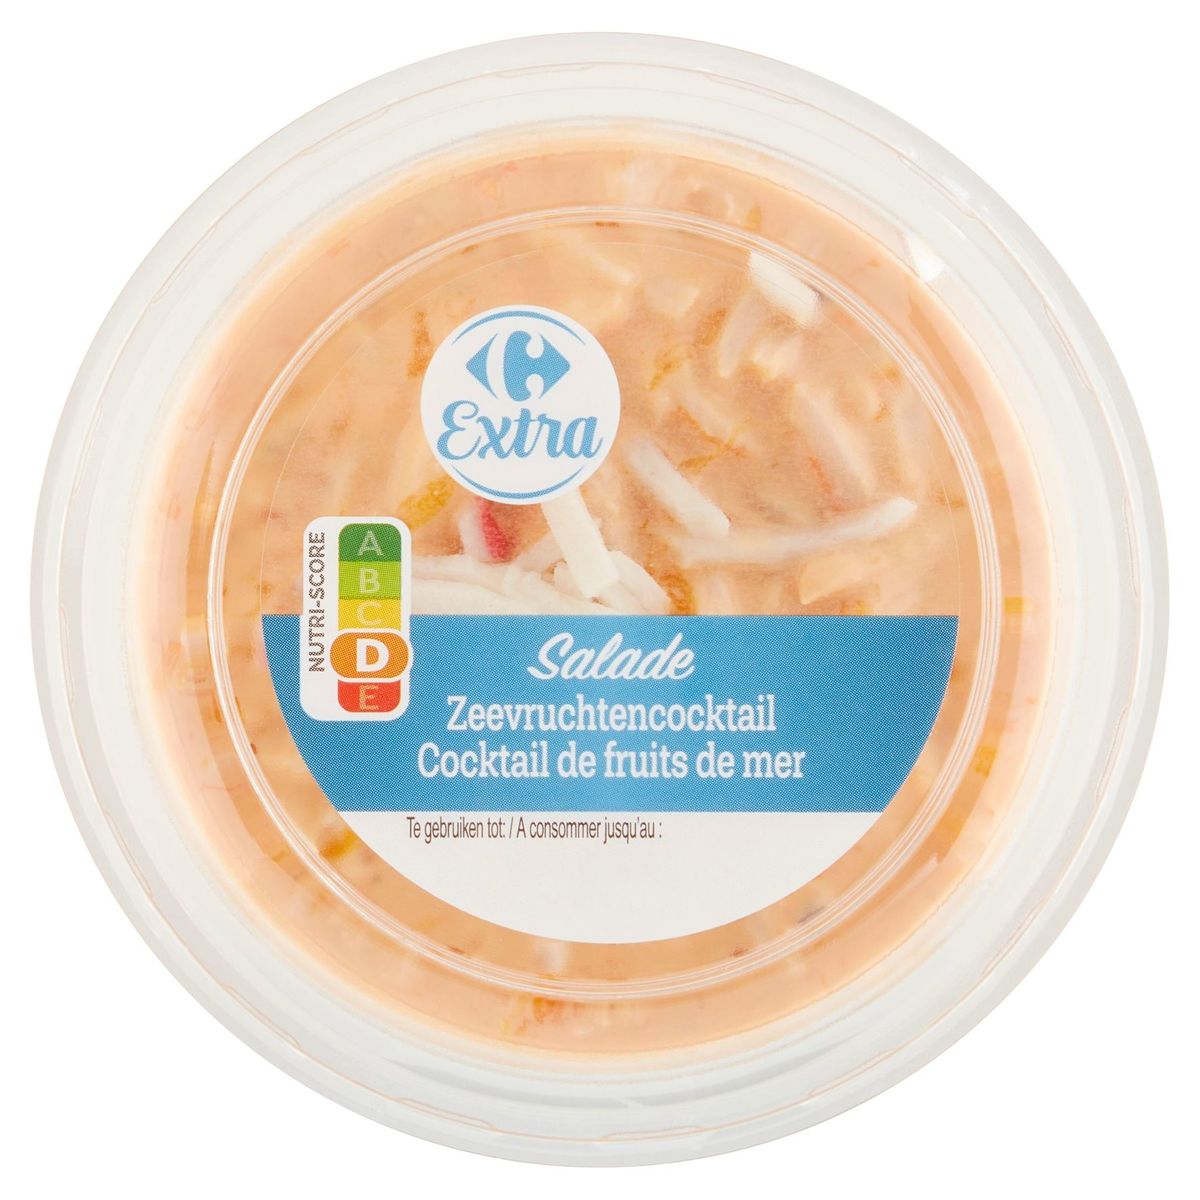 Carrefour Extra Salade Zeevruchtencocktail 120 g